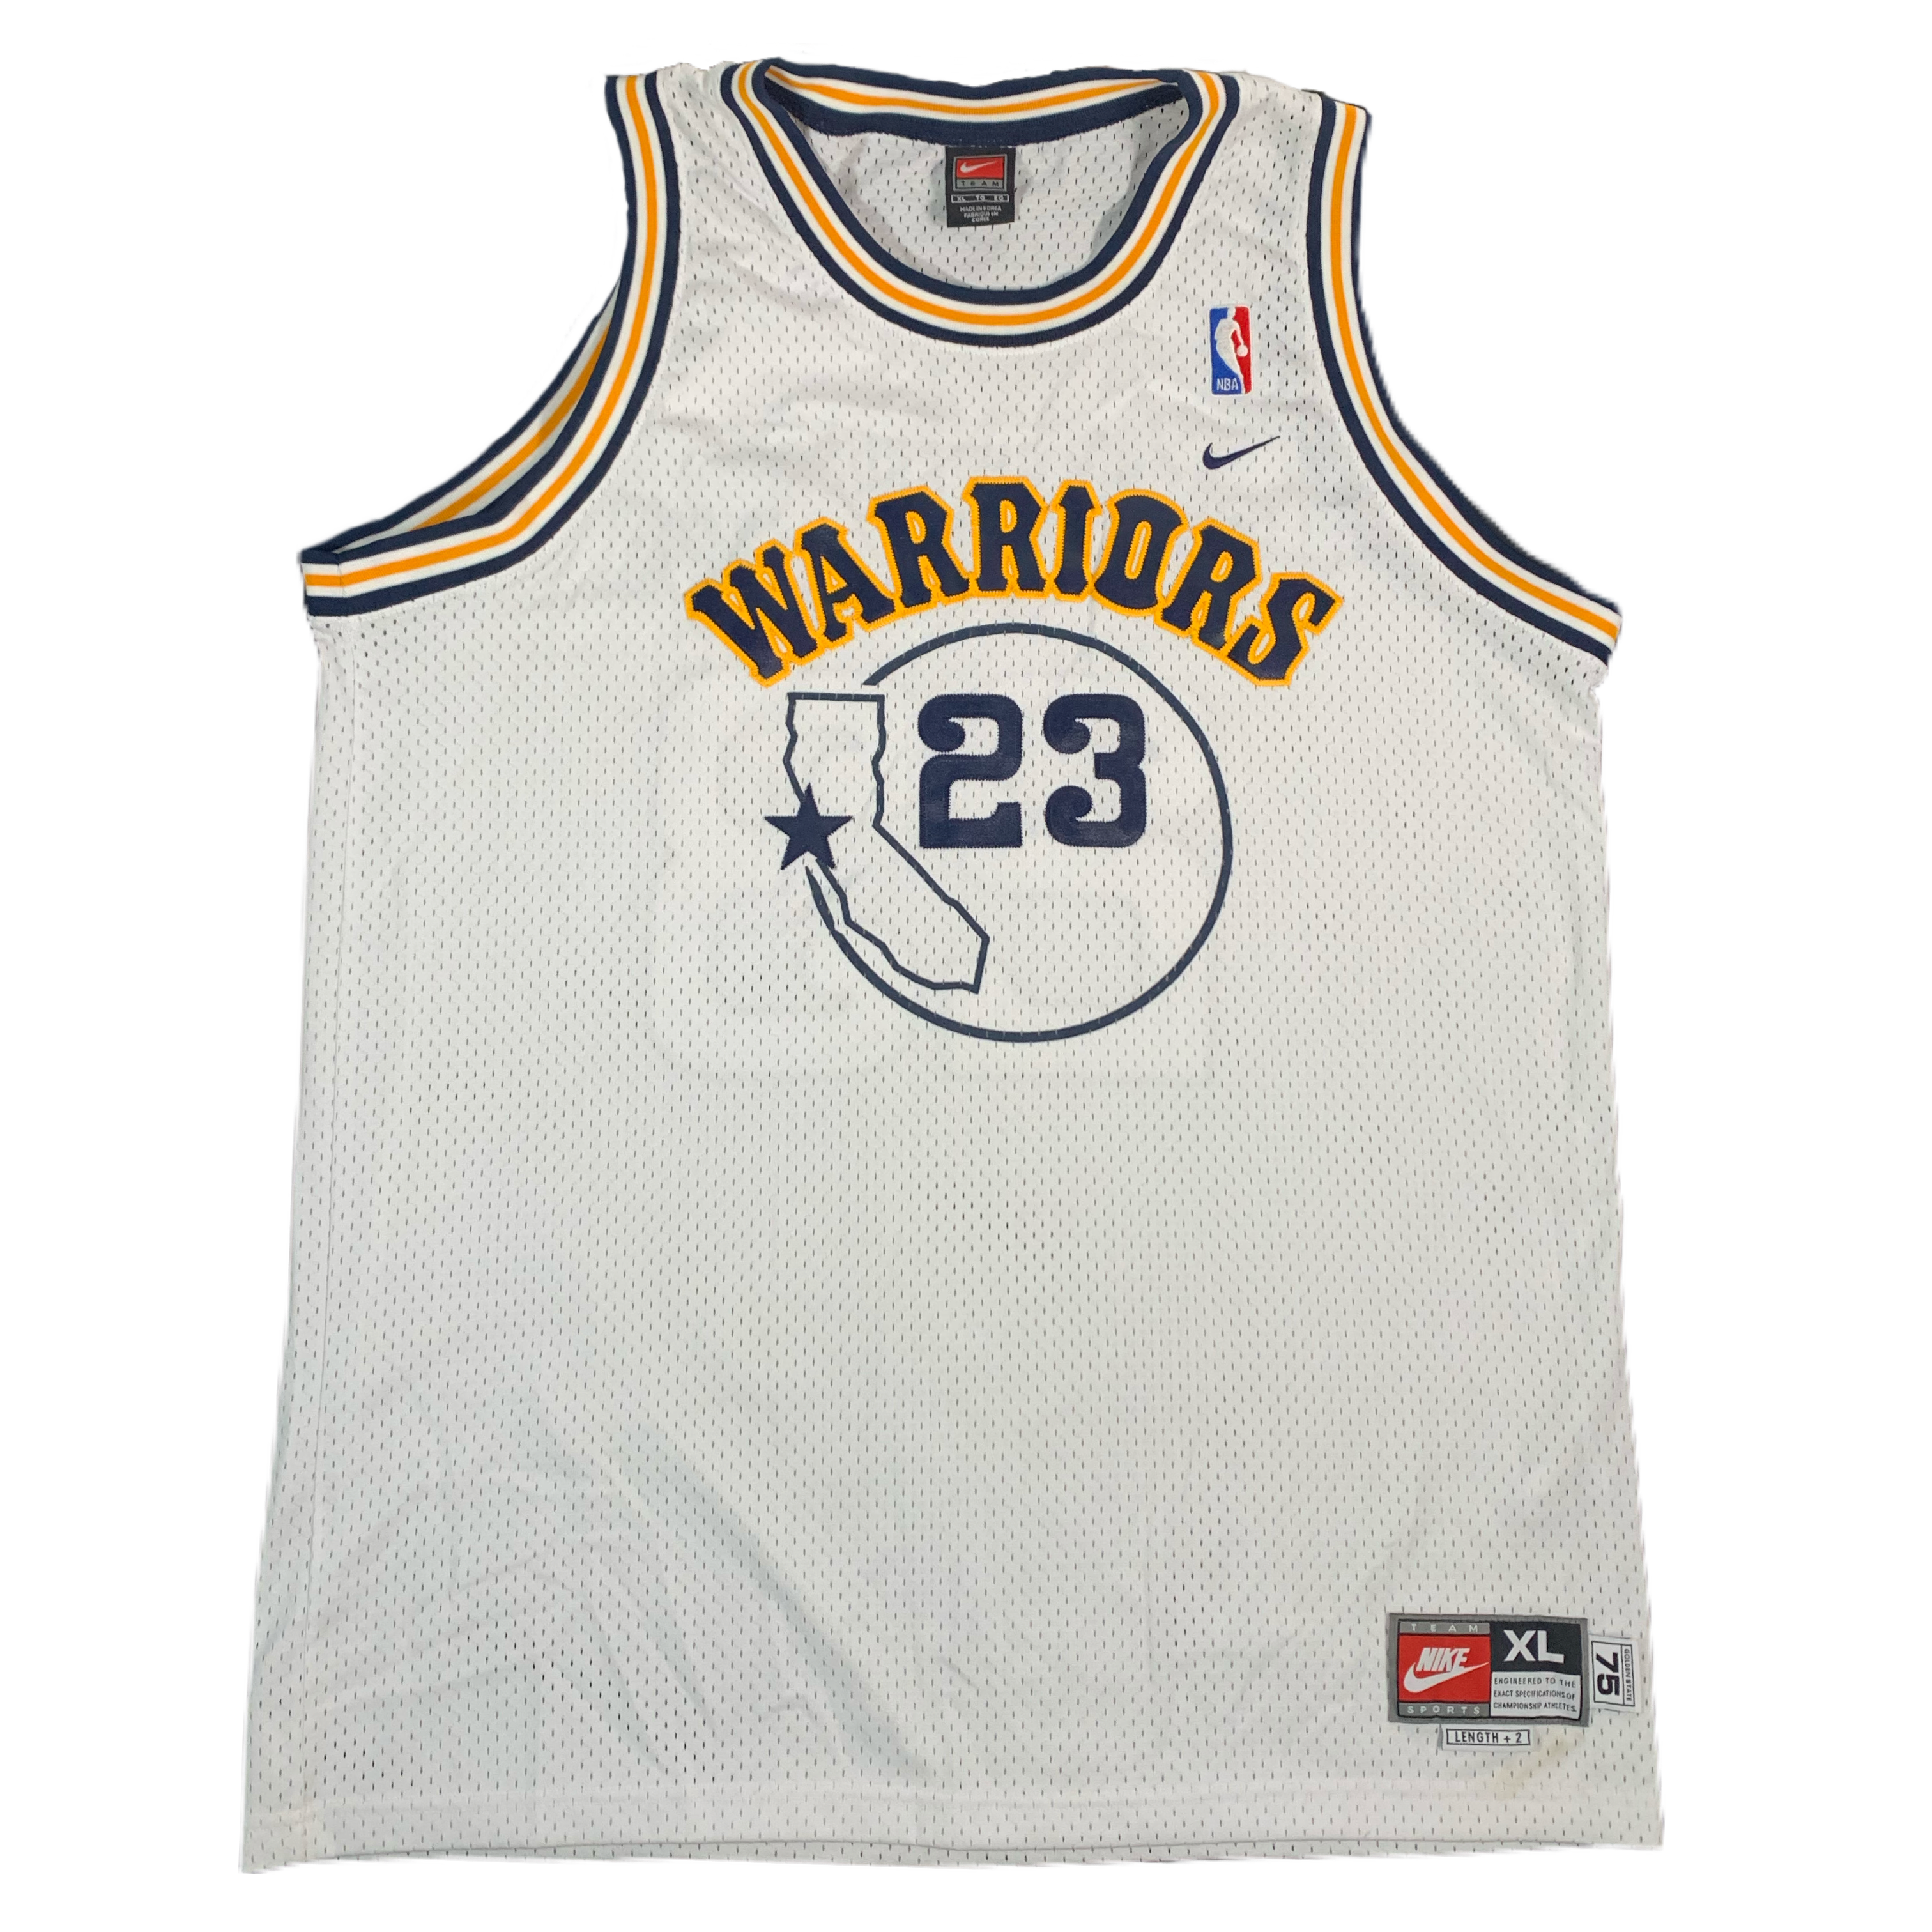 Golden State Warriors Throwback Jerseys, Vintage NBA Gear